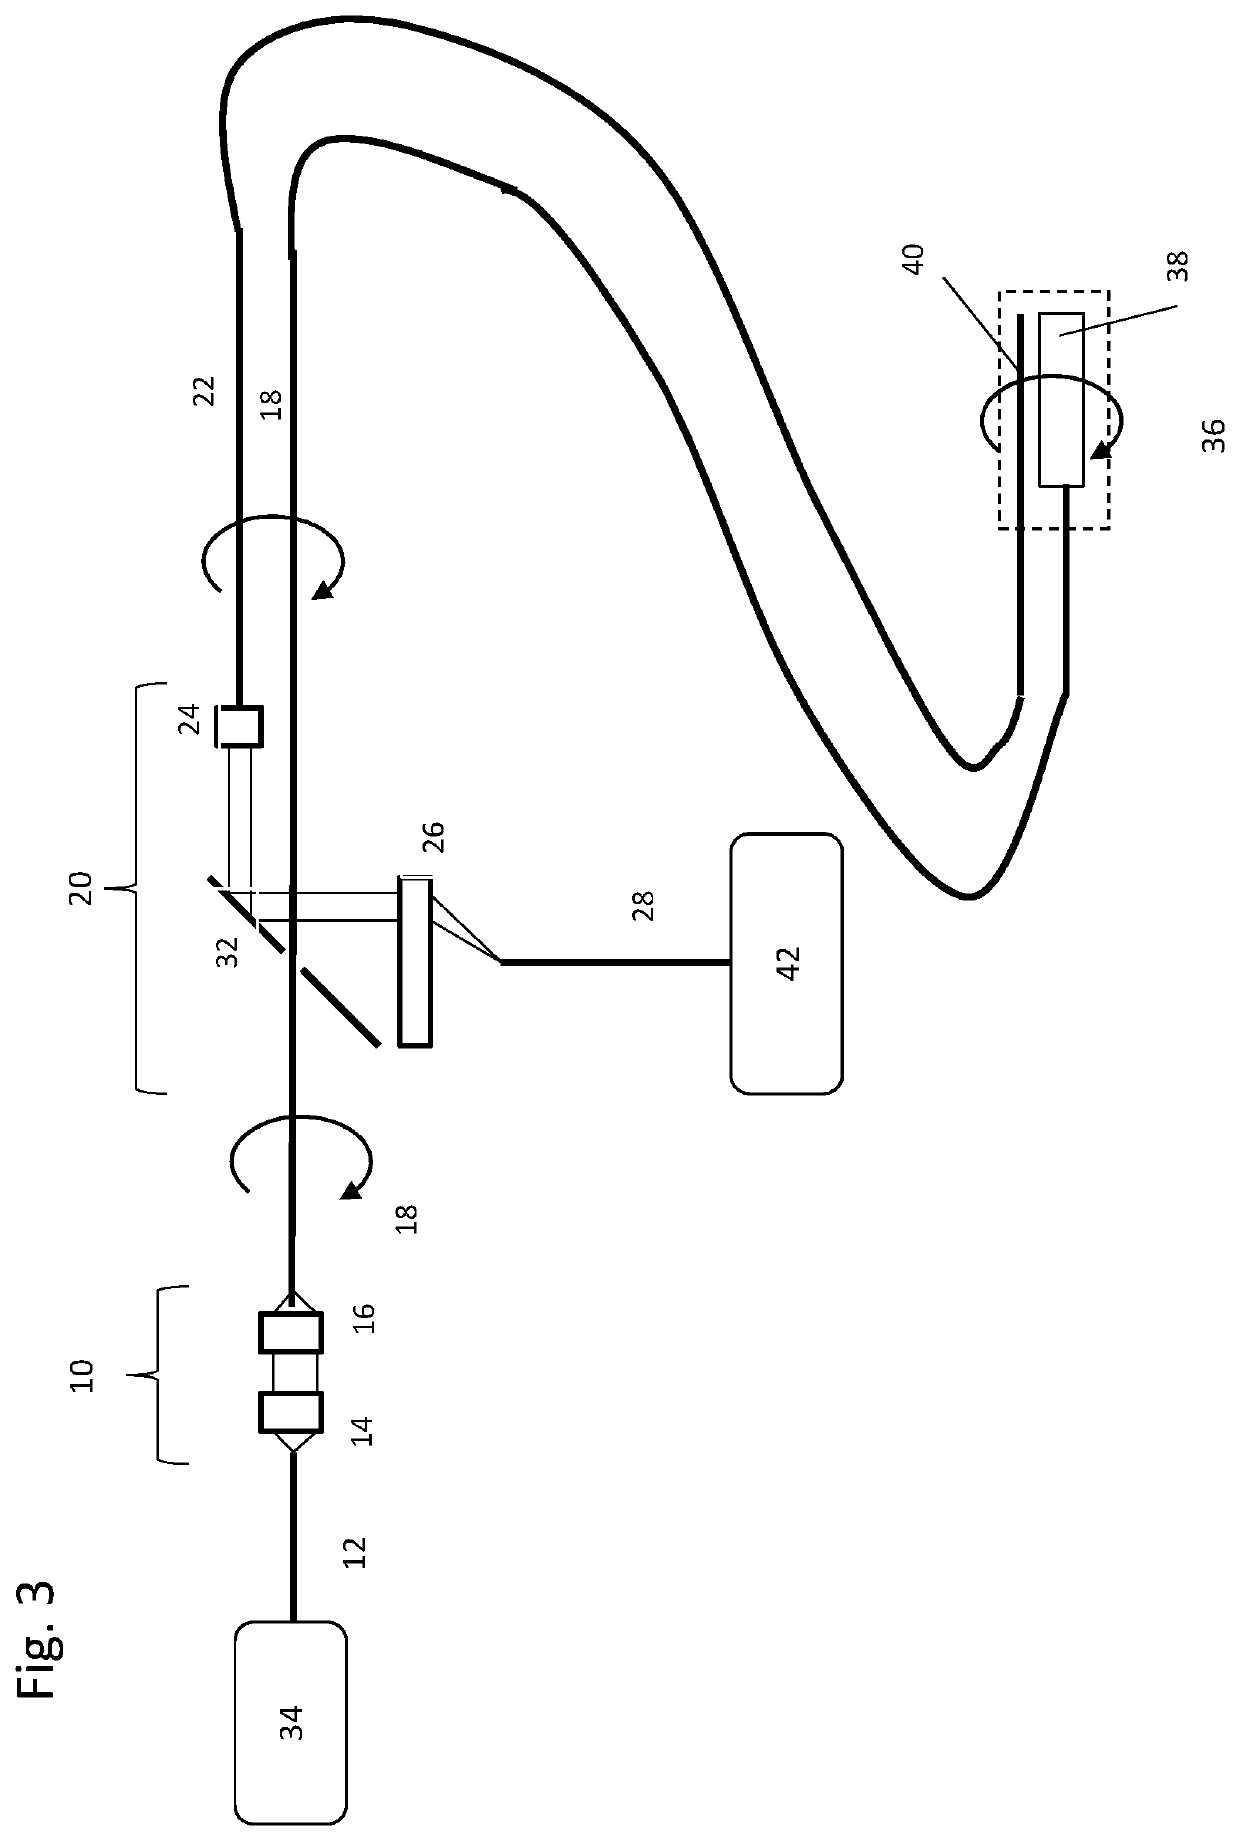 Multi-channel optical fiber rotary junction